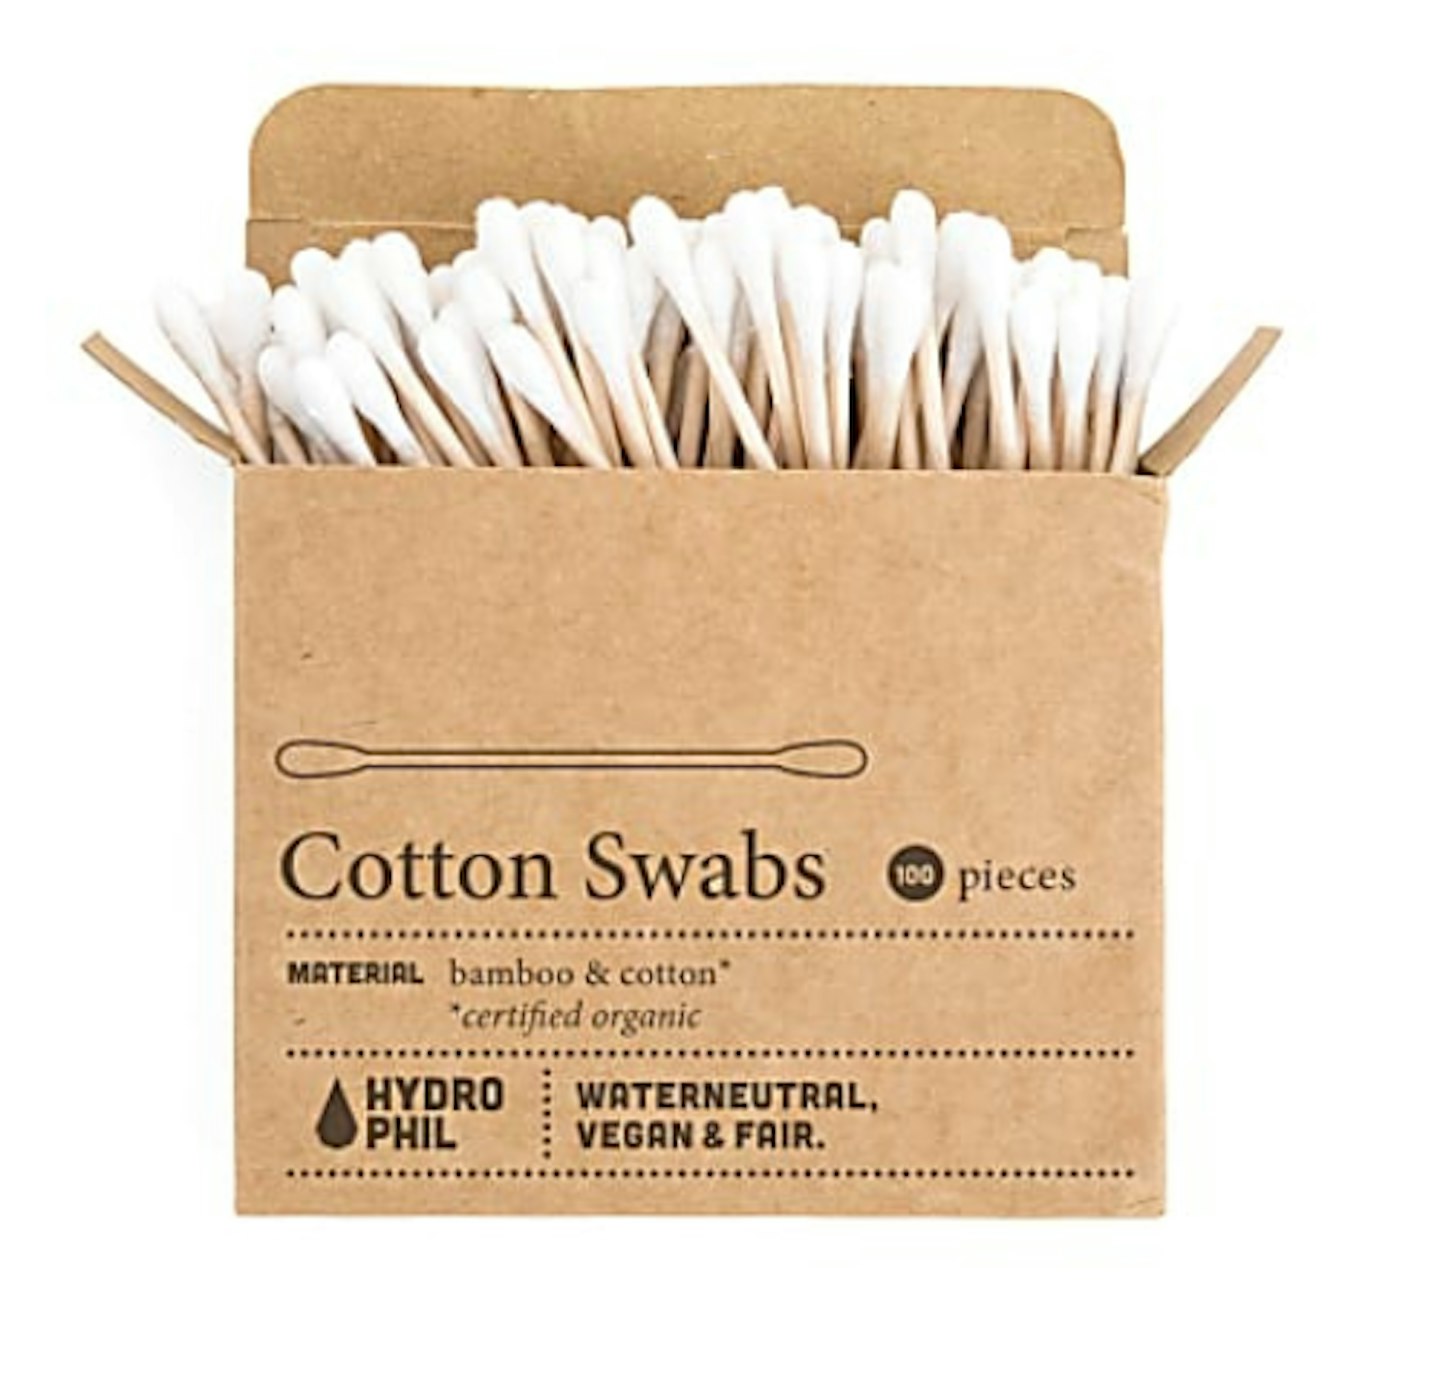 cotton swabs